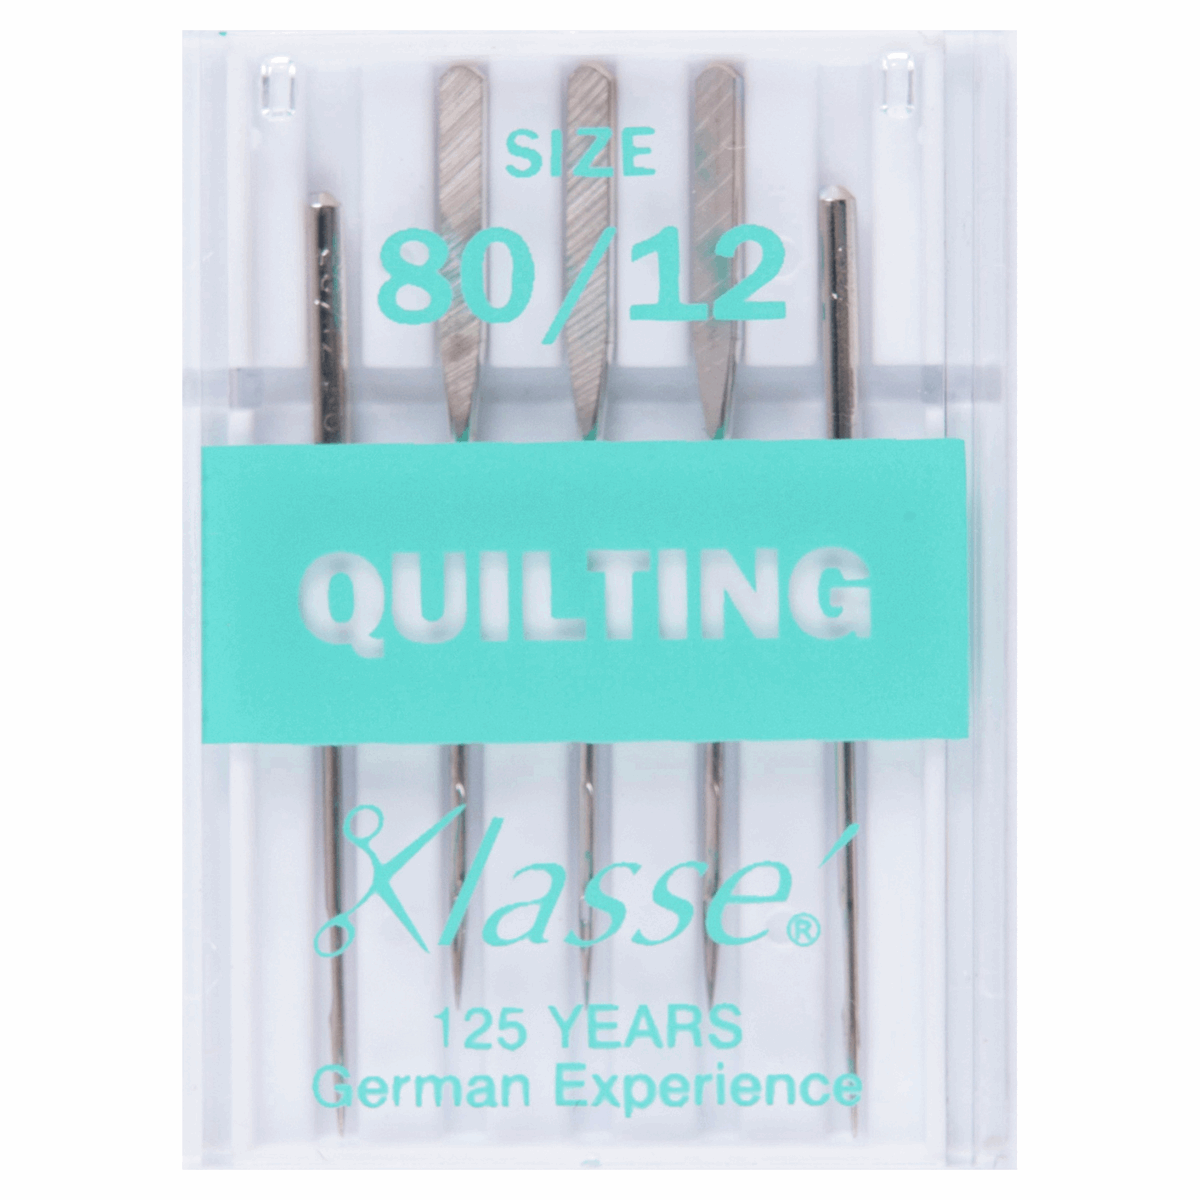 Klasse Quilting Machine Needles - Size 80/12